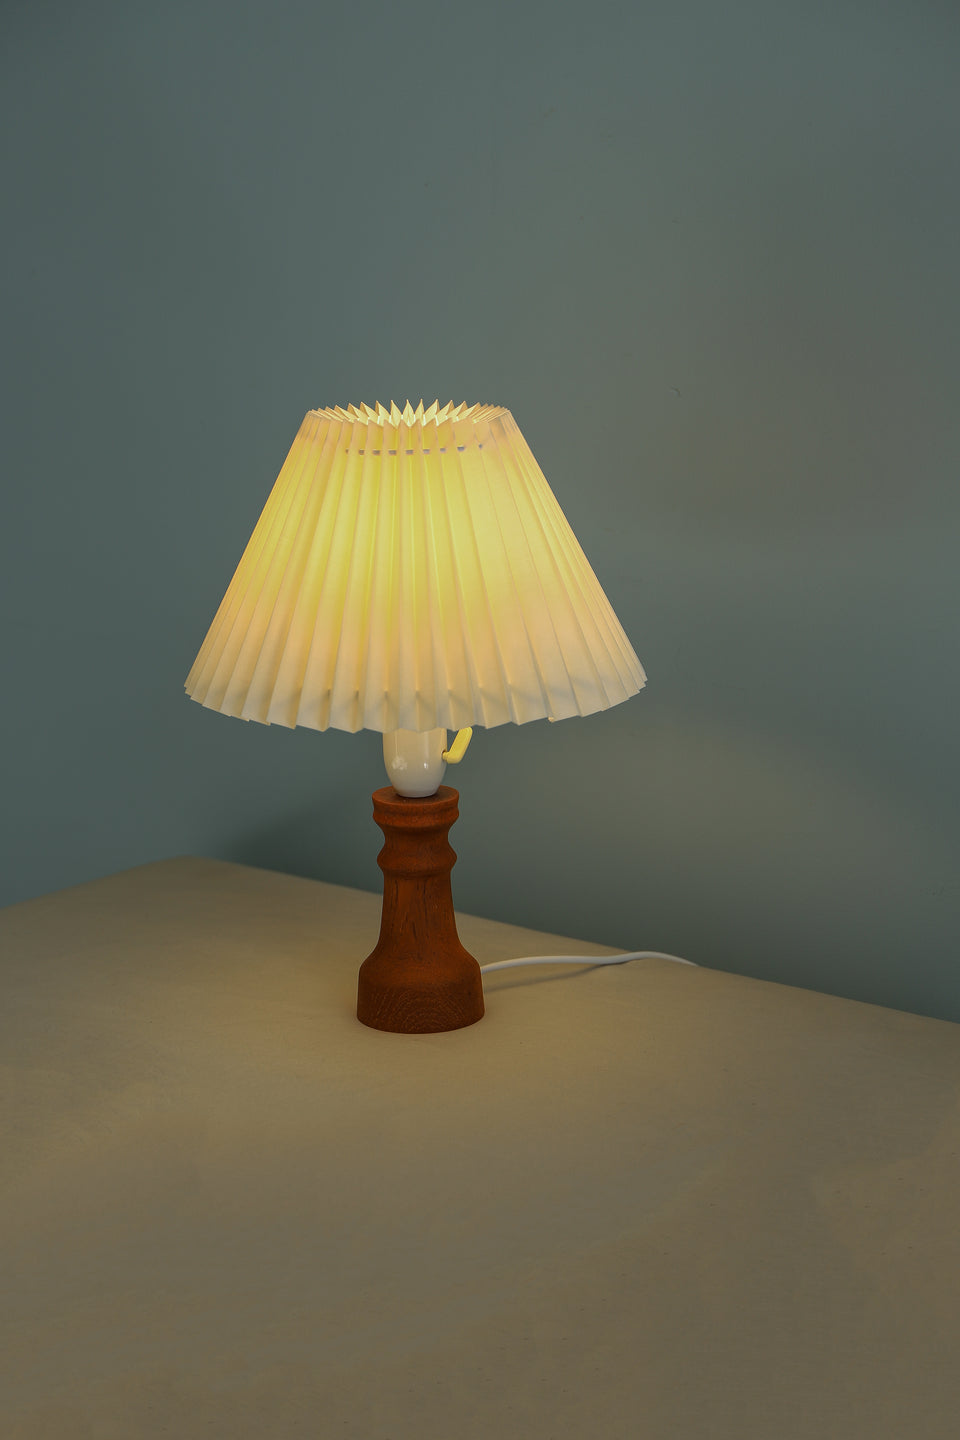 Small Table Lamp Danish Vintage Teakwood/デンマークヴィンテージ テーブルランプ 間接照明 チーク材 北欧インテリア